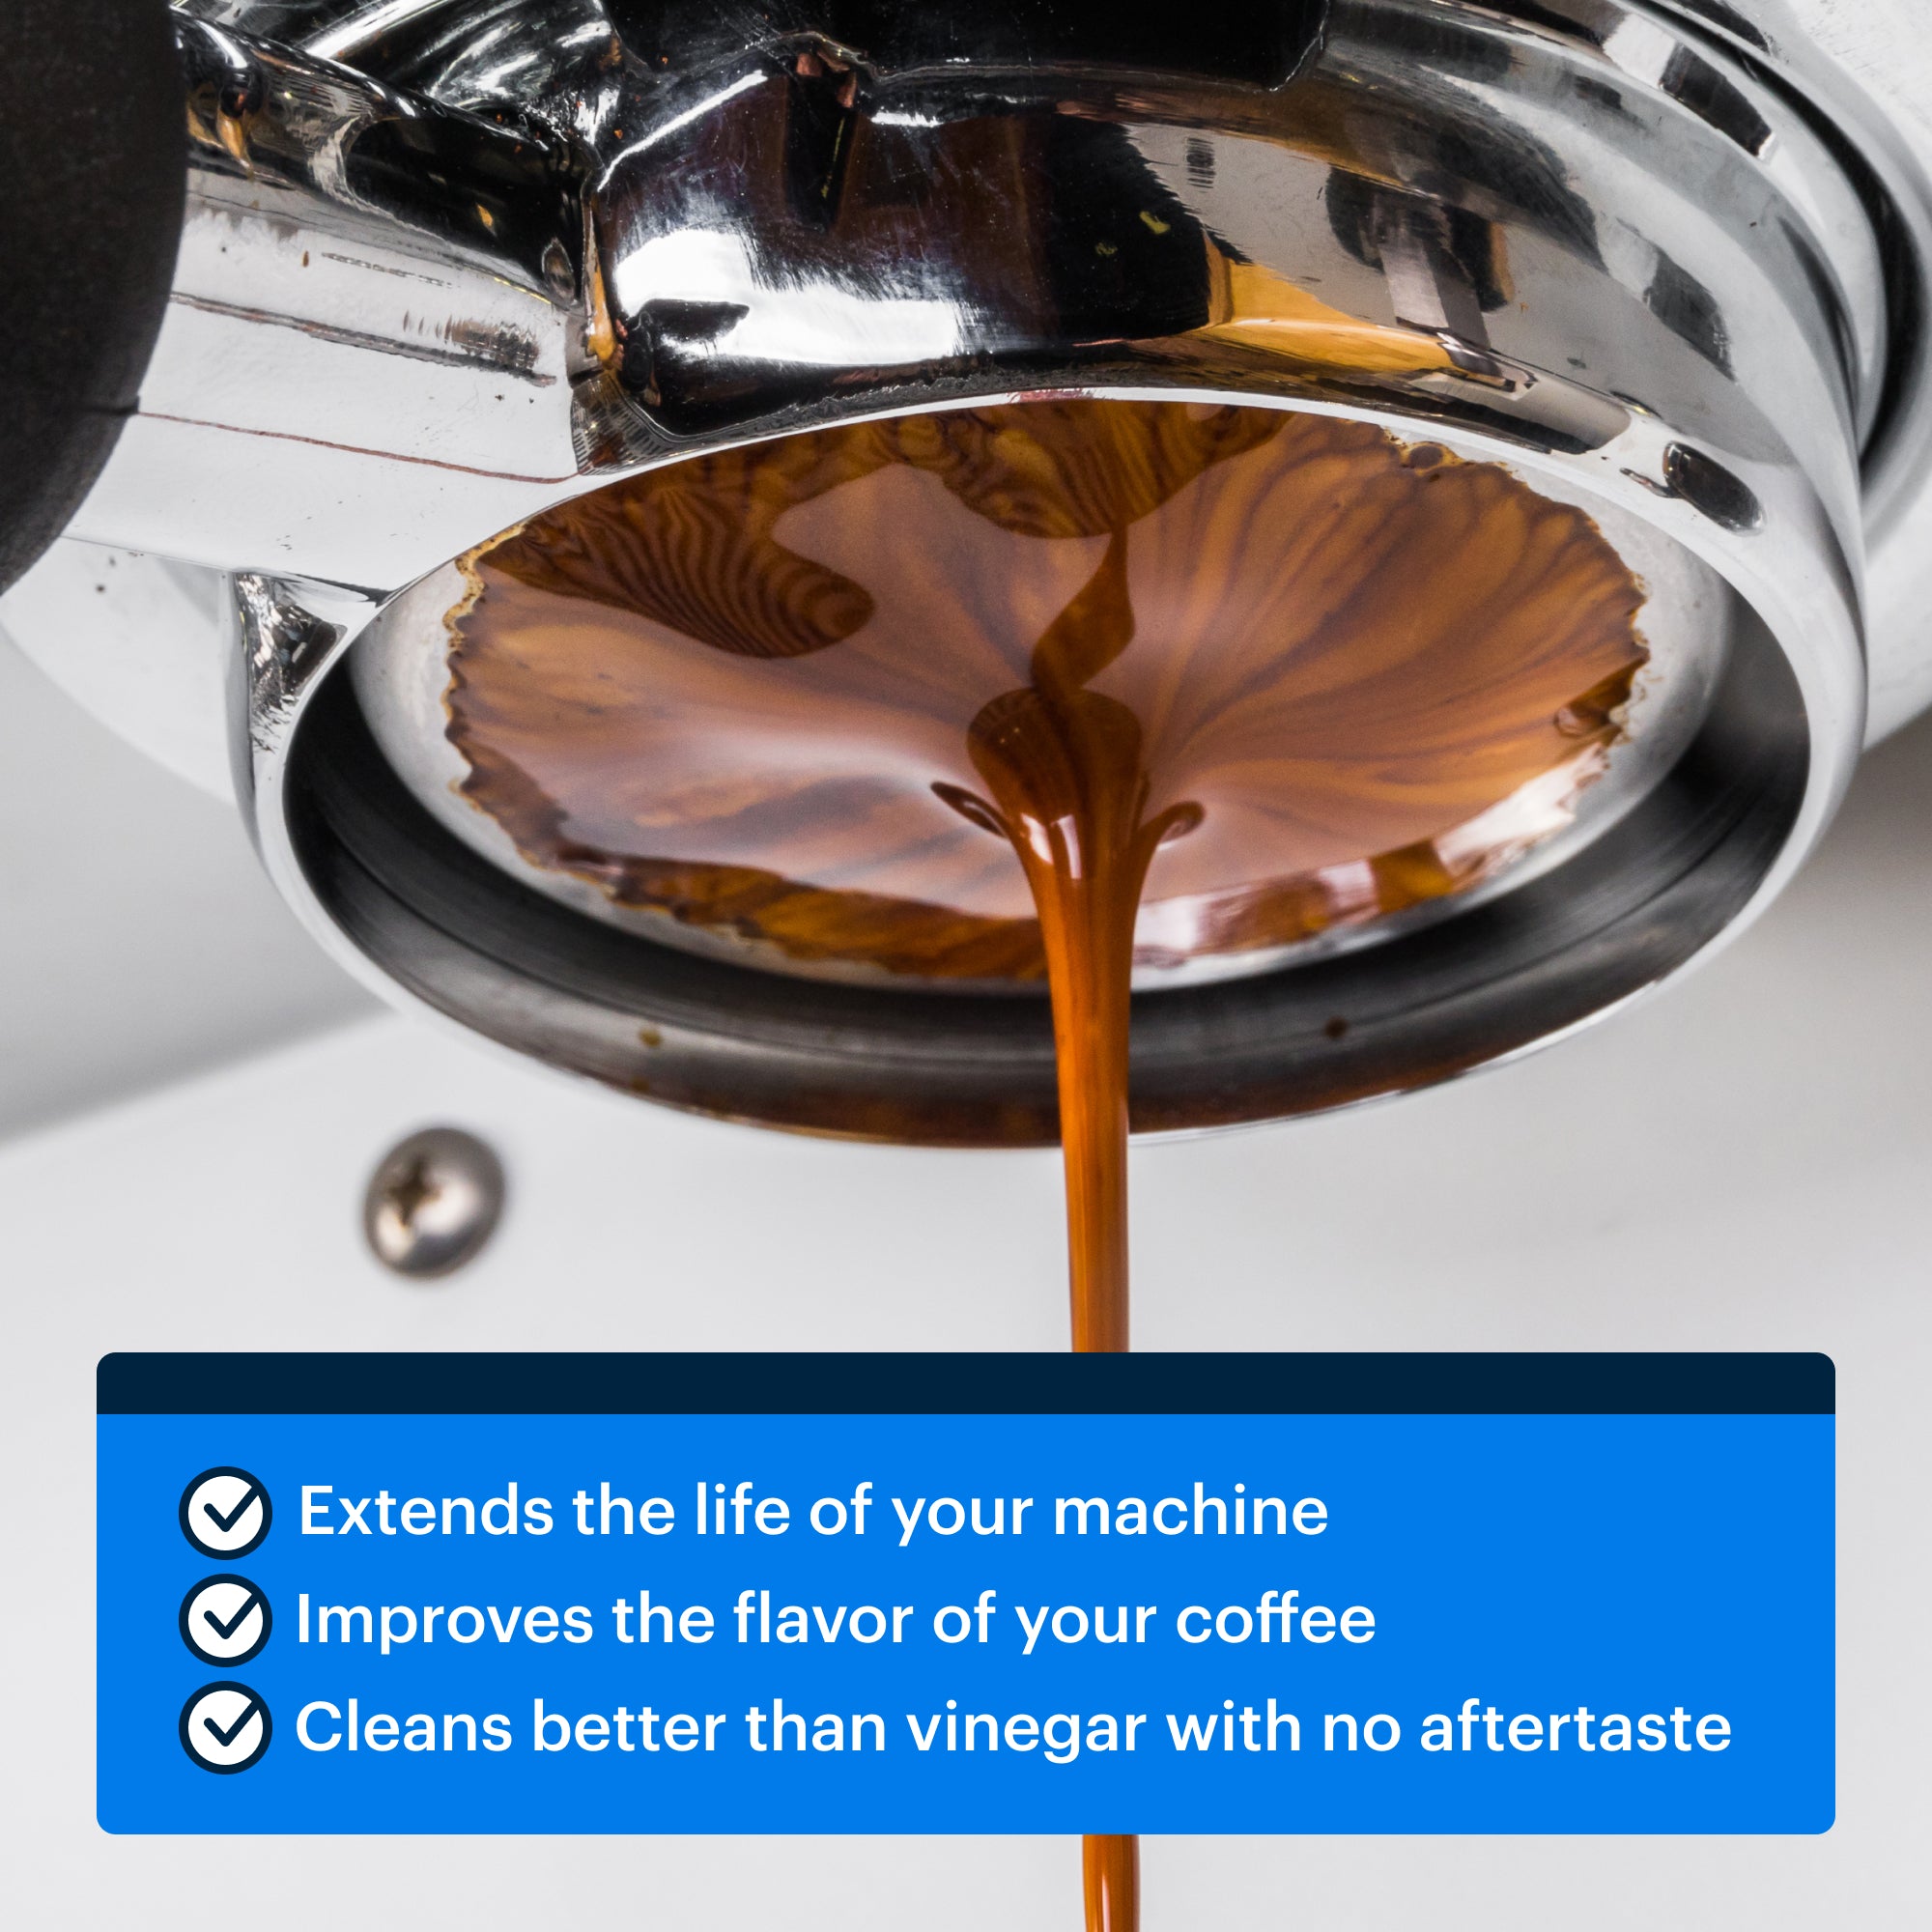 How Descale Your Delonghi Coffee Machine?